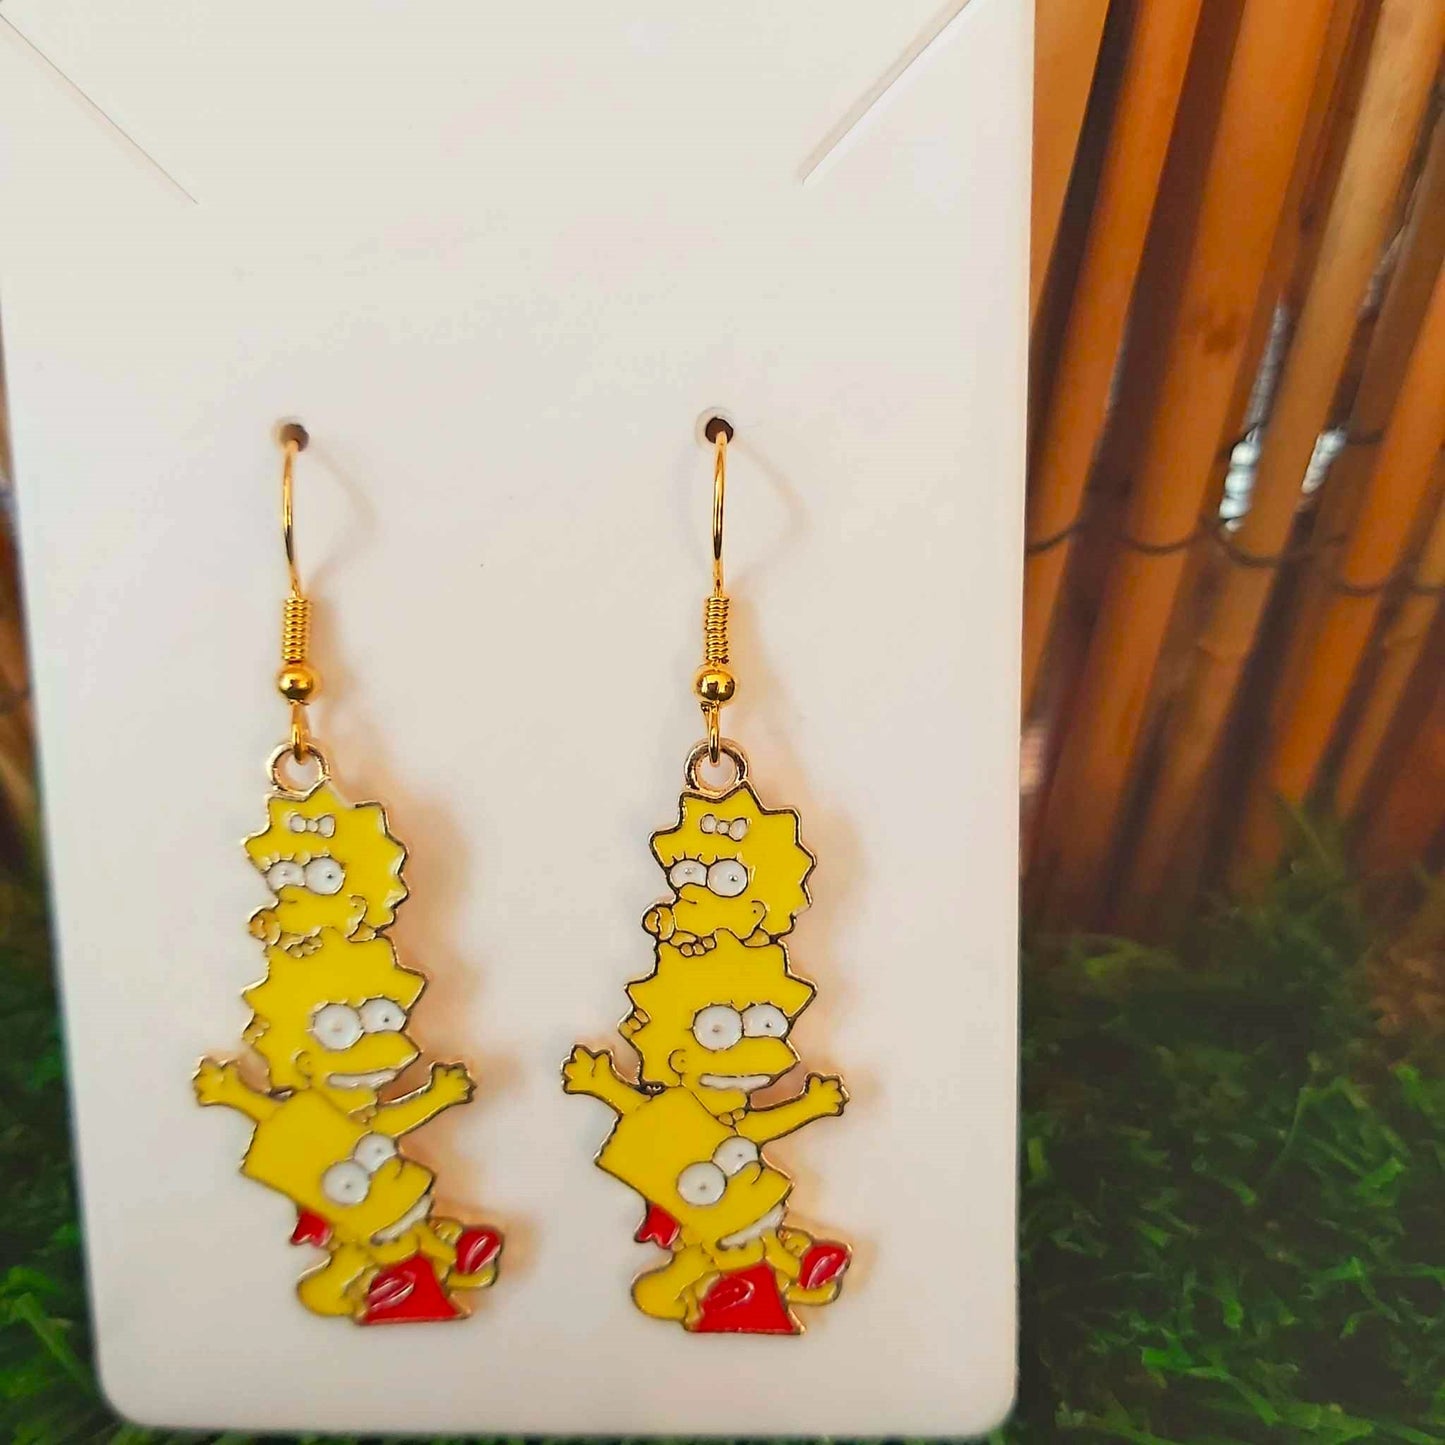 Handmade The Simpsons Earrings